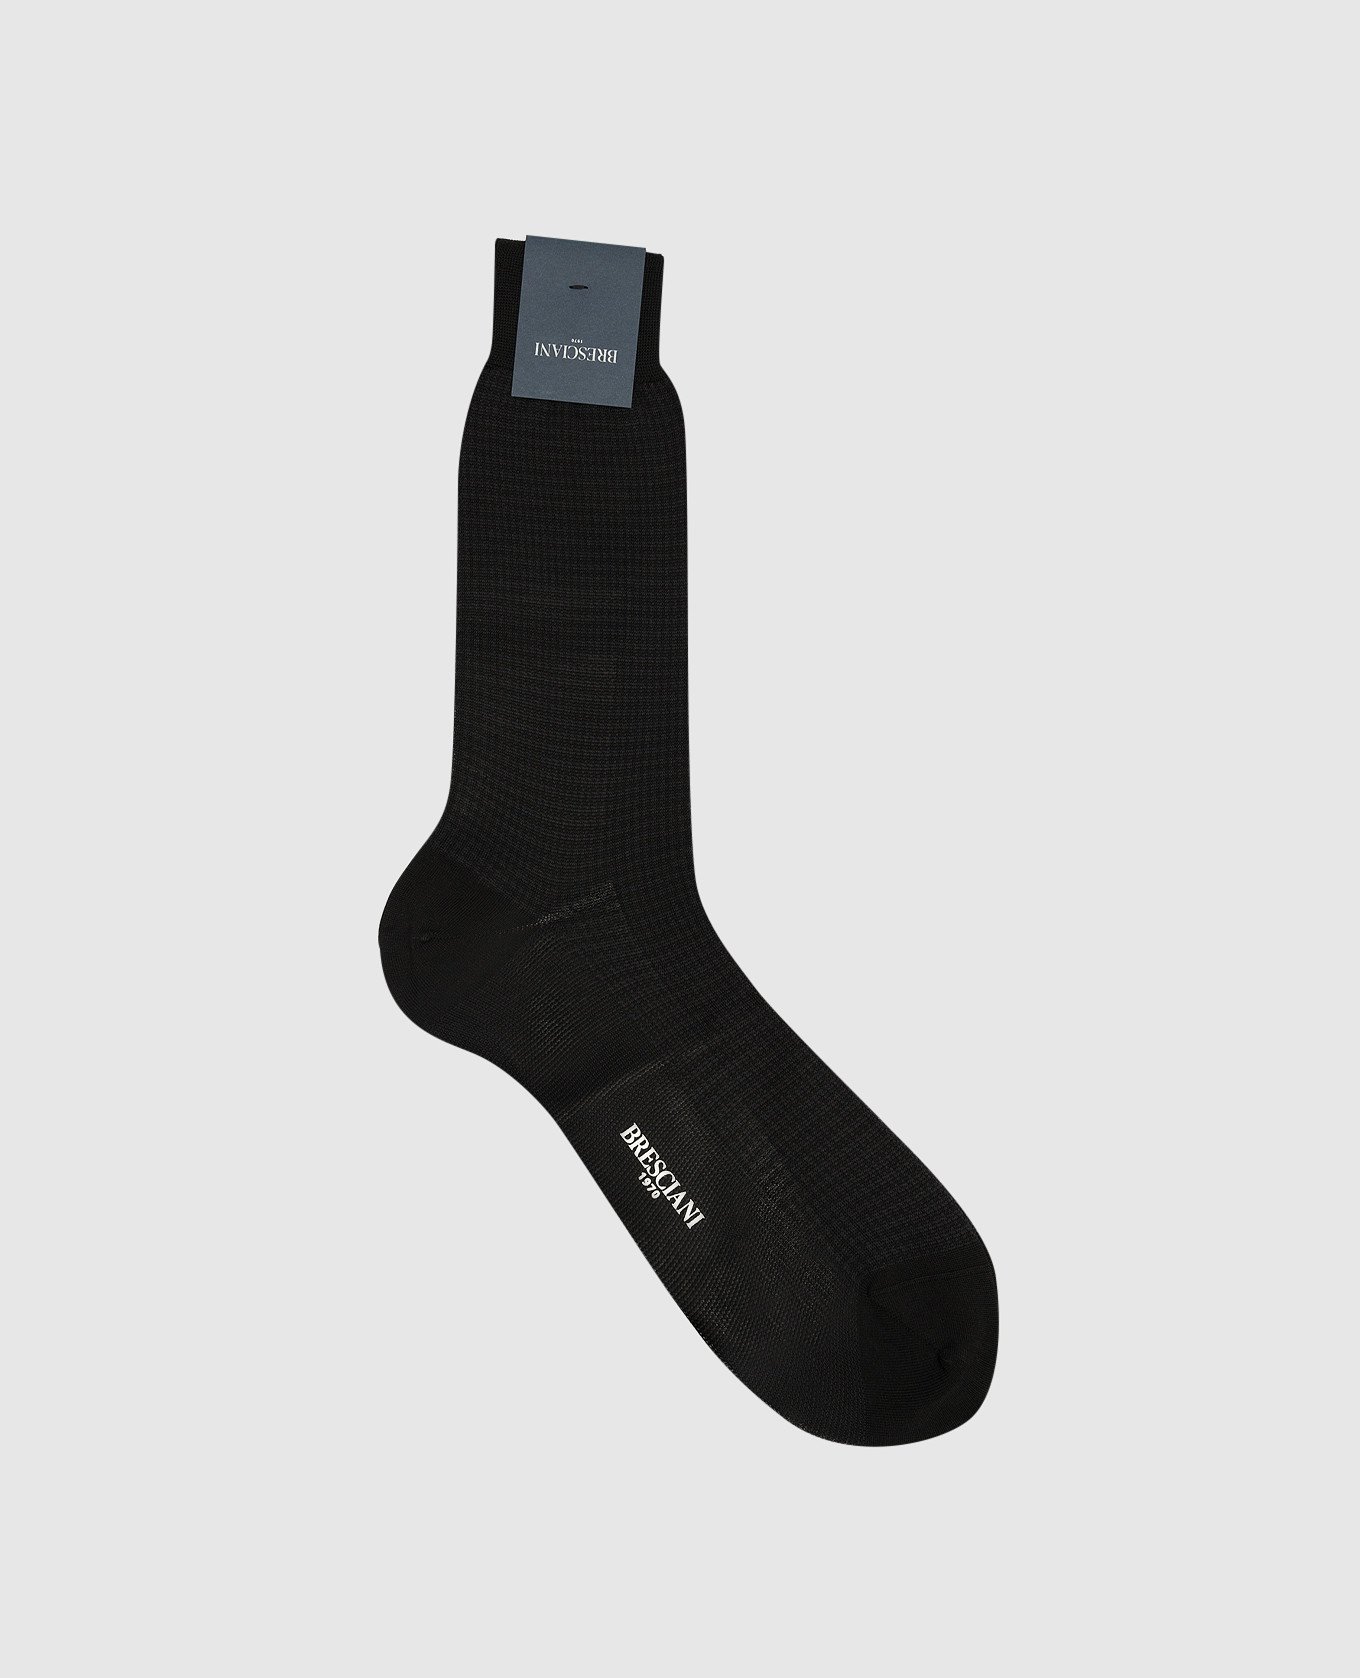 Black socks in a houndstooth pattern